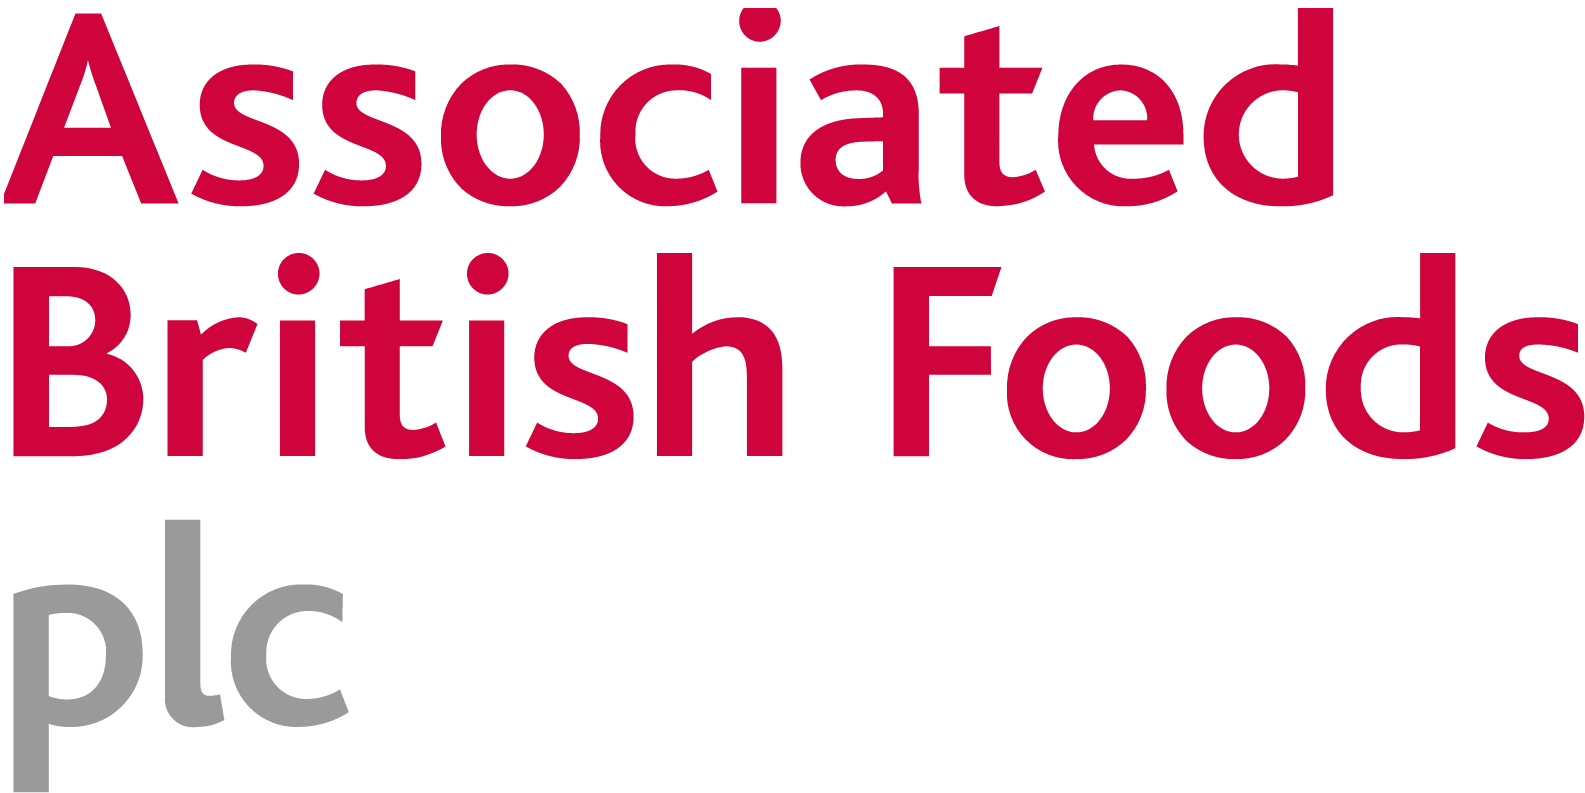 ASSOCIATED BRITISH FOODS PLC